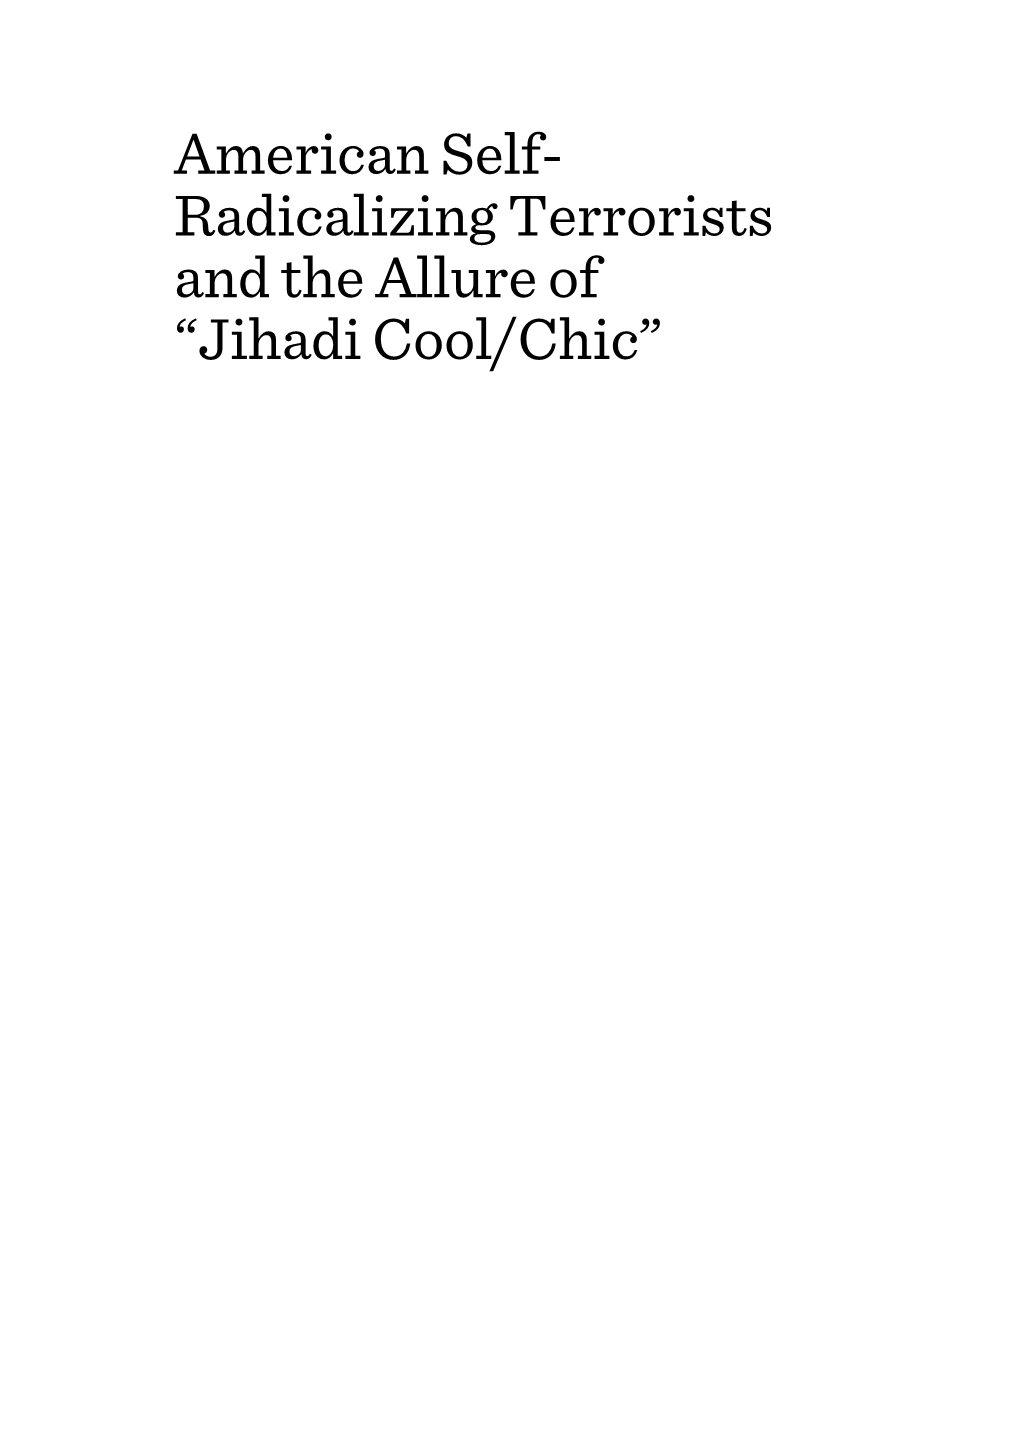 American Self- Radicalizing Terrorists and the Allure of “Jihadi Cool/Chic”